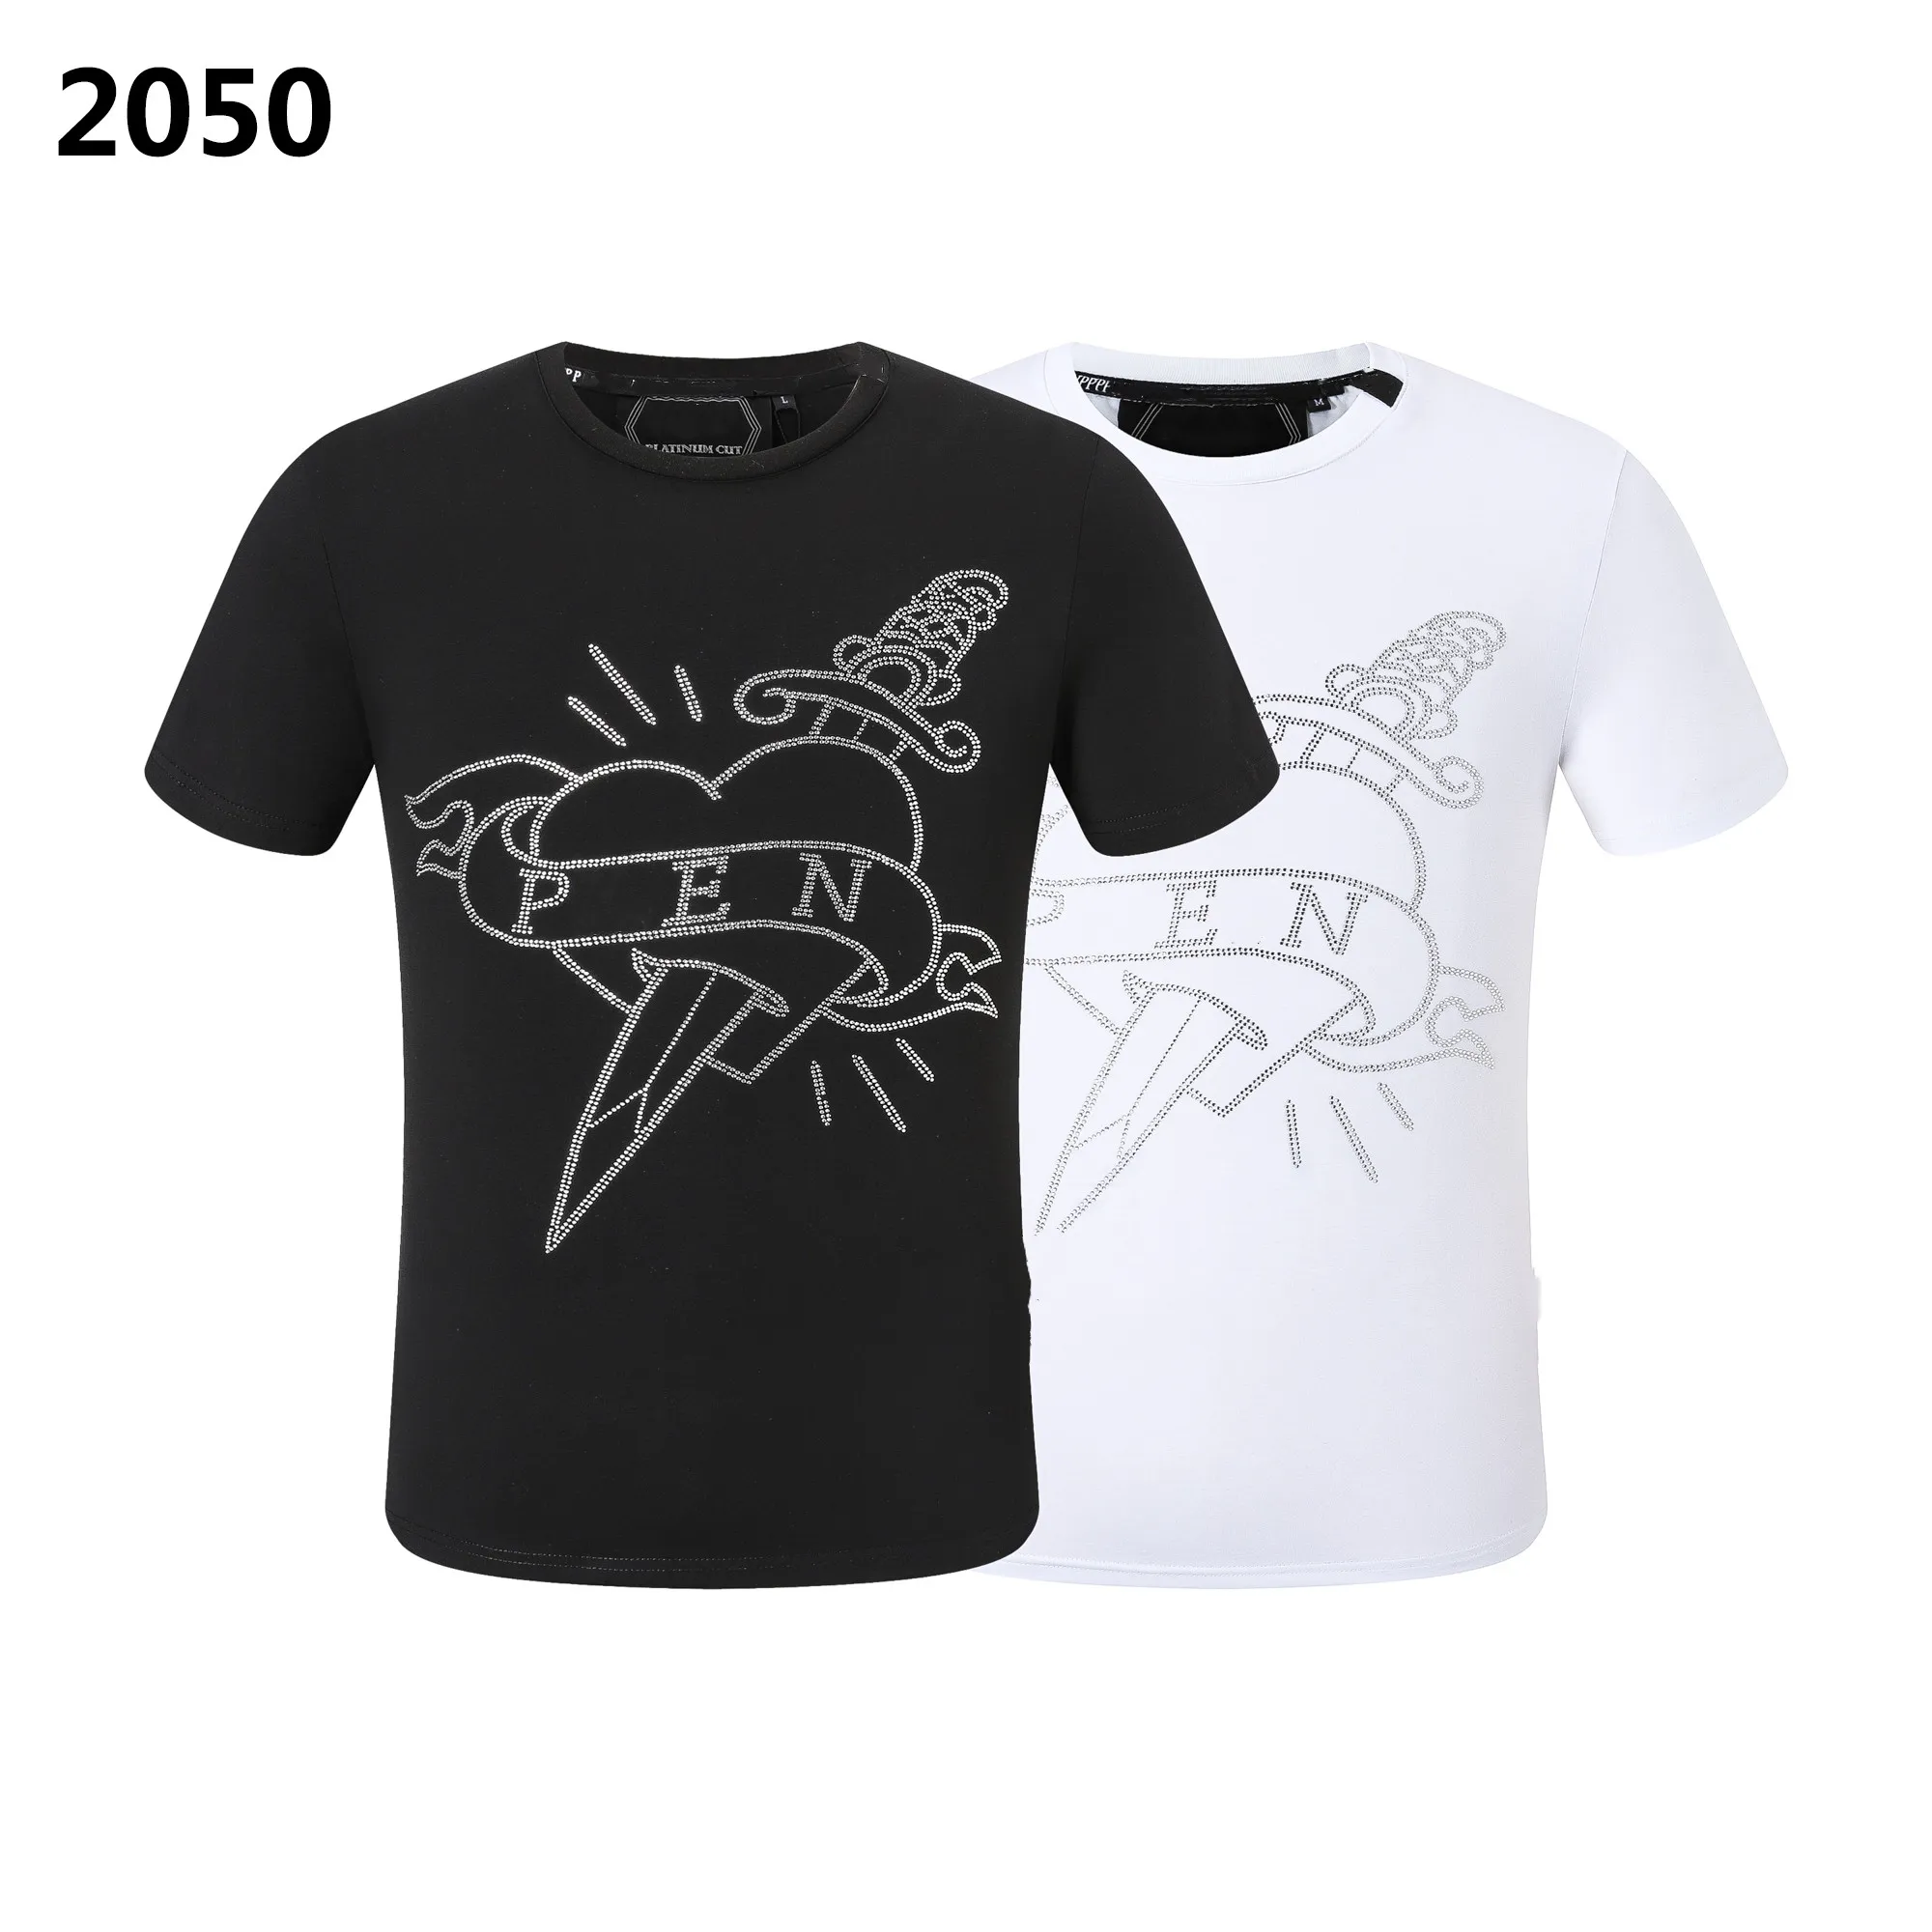 Phillip Plain Summer Męska Czaszka Rhinestone T-shirt Koraliki mody Projektant męskiej T-shirt TOP QP LITT LITH Hafdery Męskie Ubranie dla kobiet Krótkie T-shirt 2050